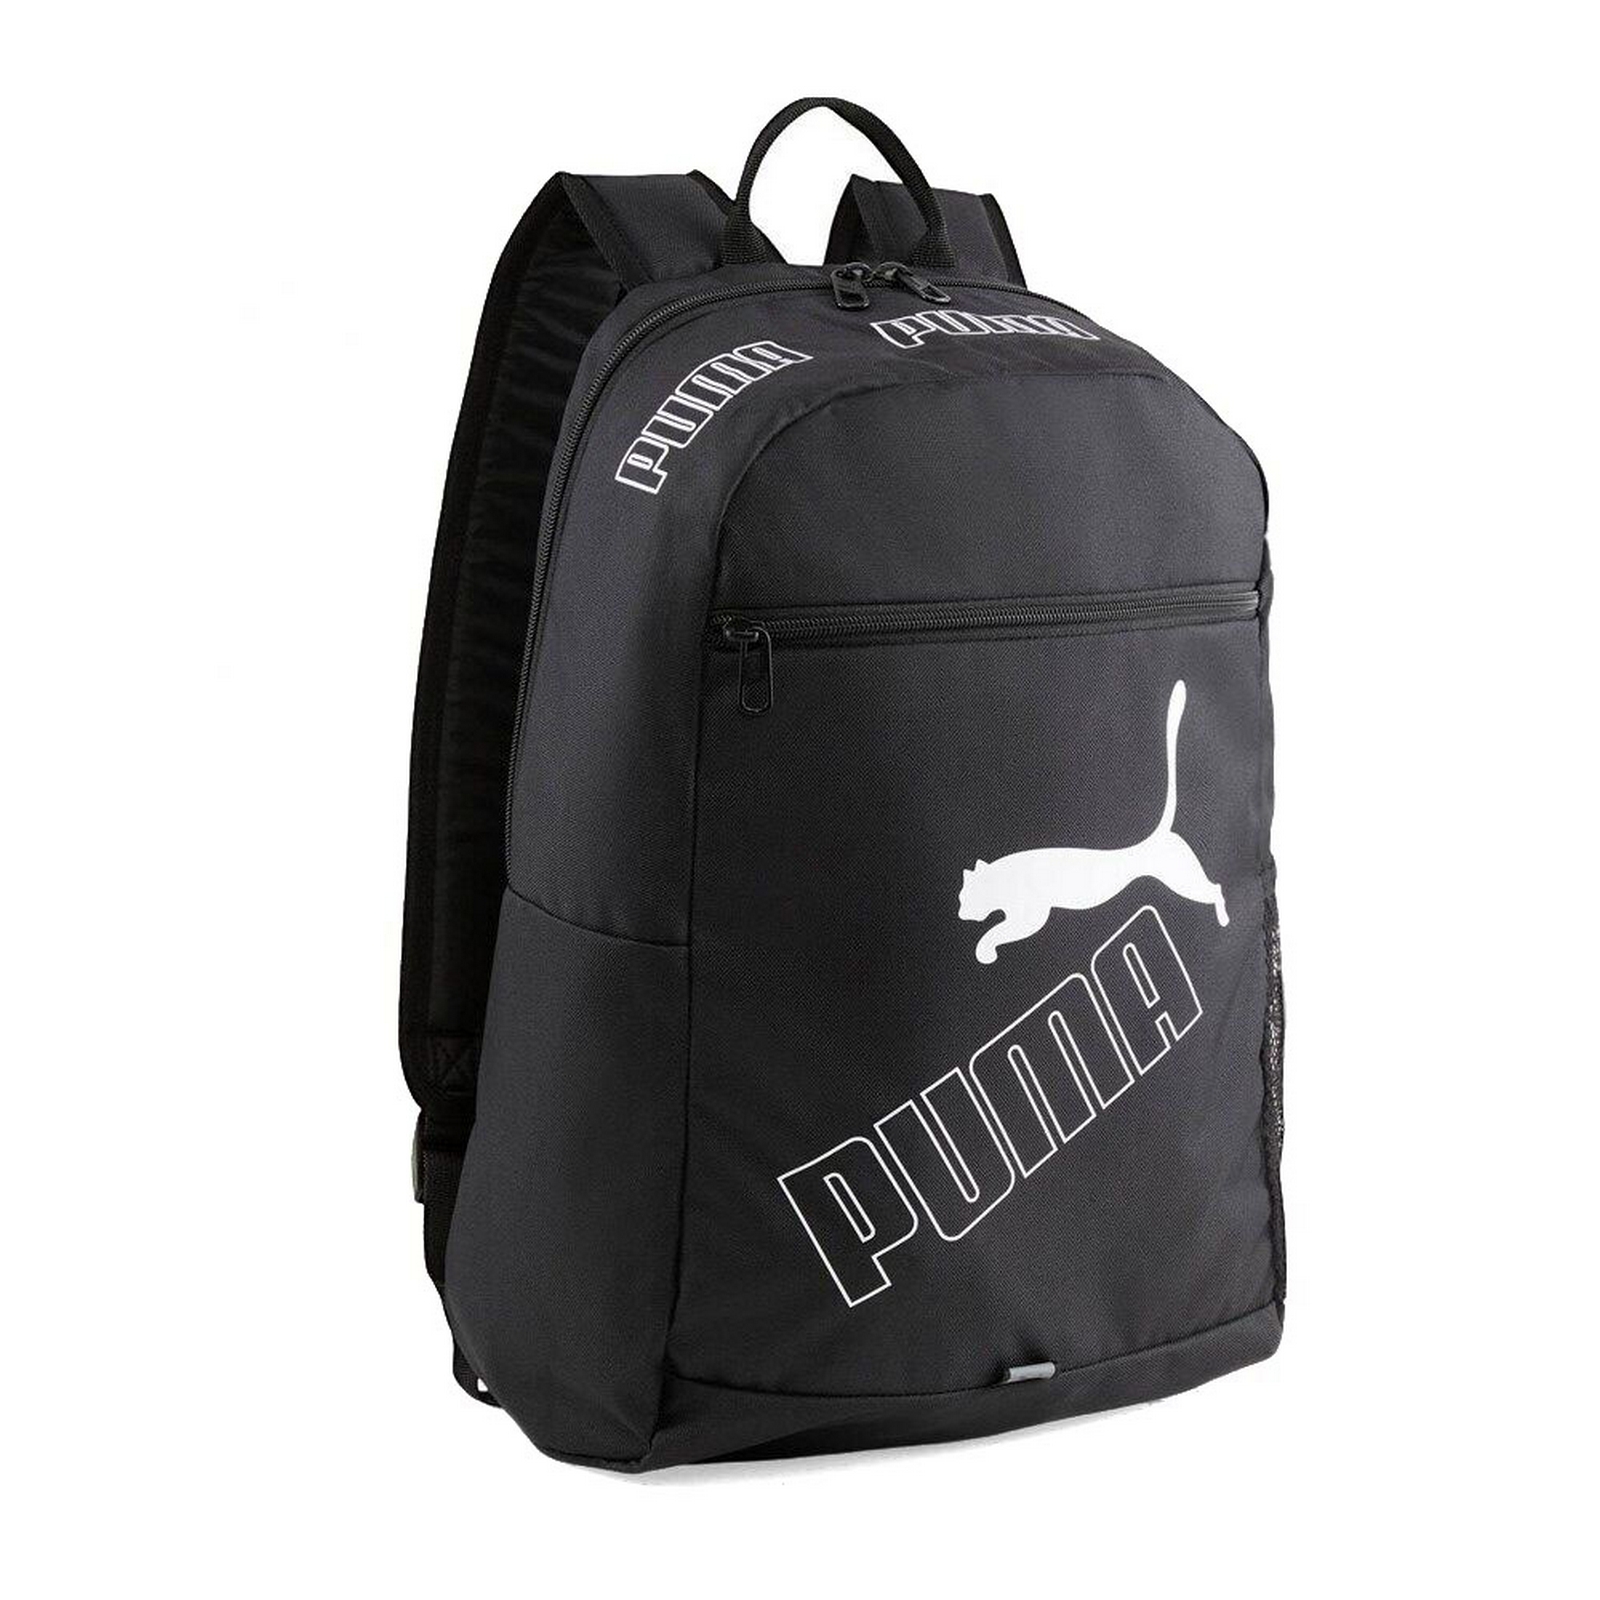 Рюкзак спортивный Phase Backpack II, полиэстер Puma 07995201 черный - фото 1